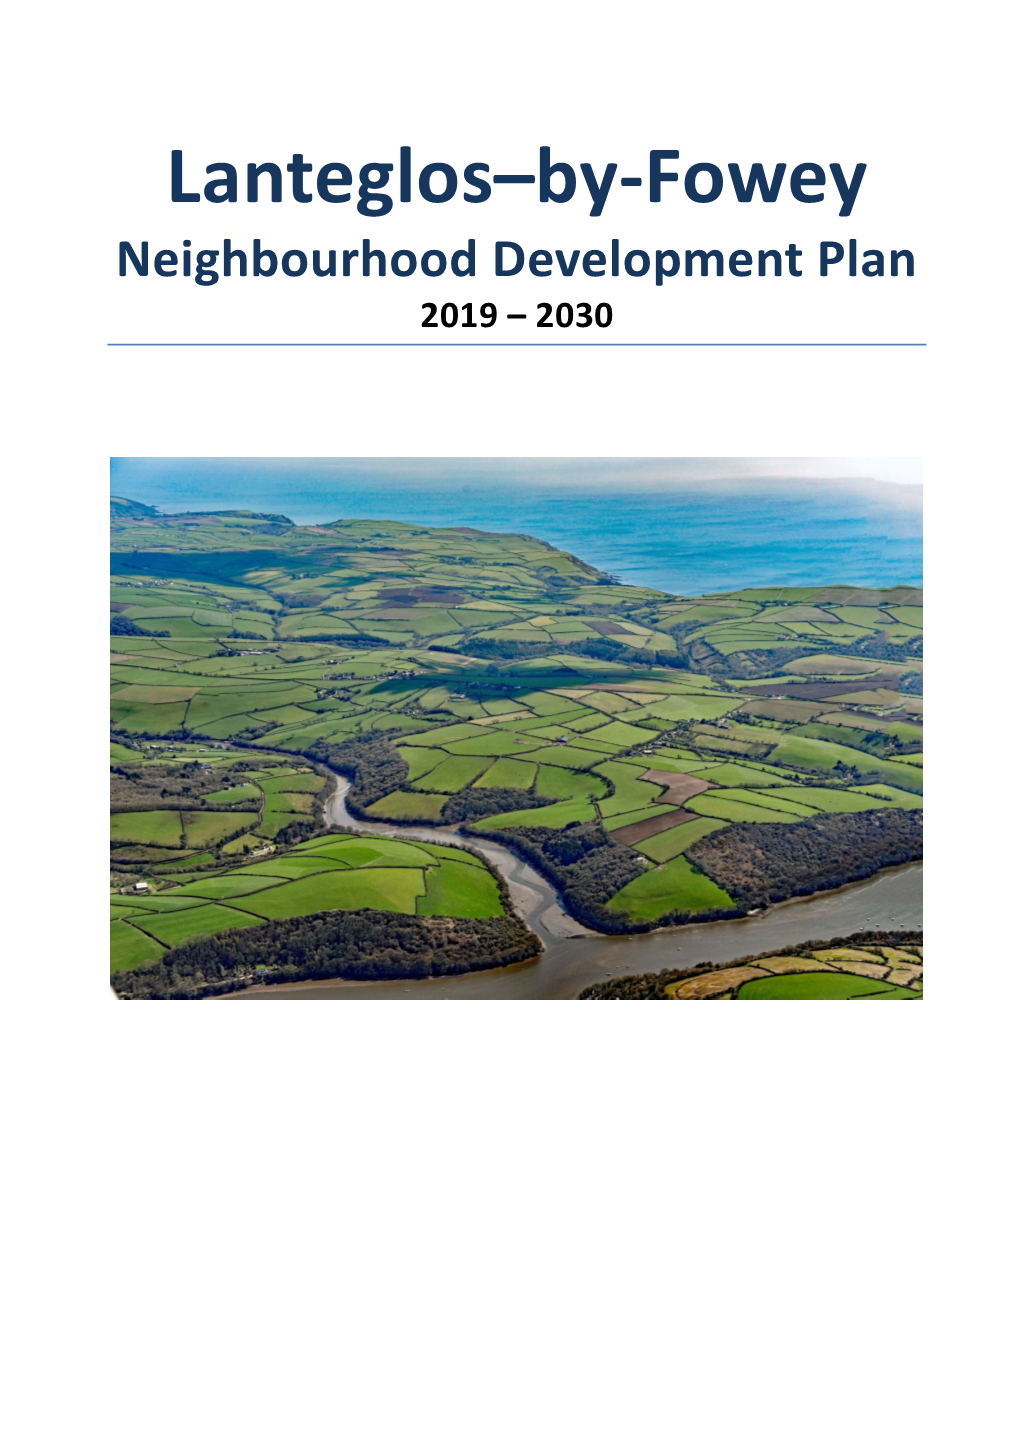 Lanteglos by Fowey Neighbourhood Development Plan